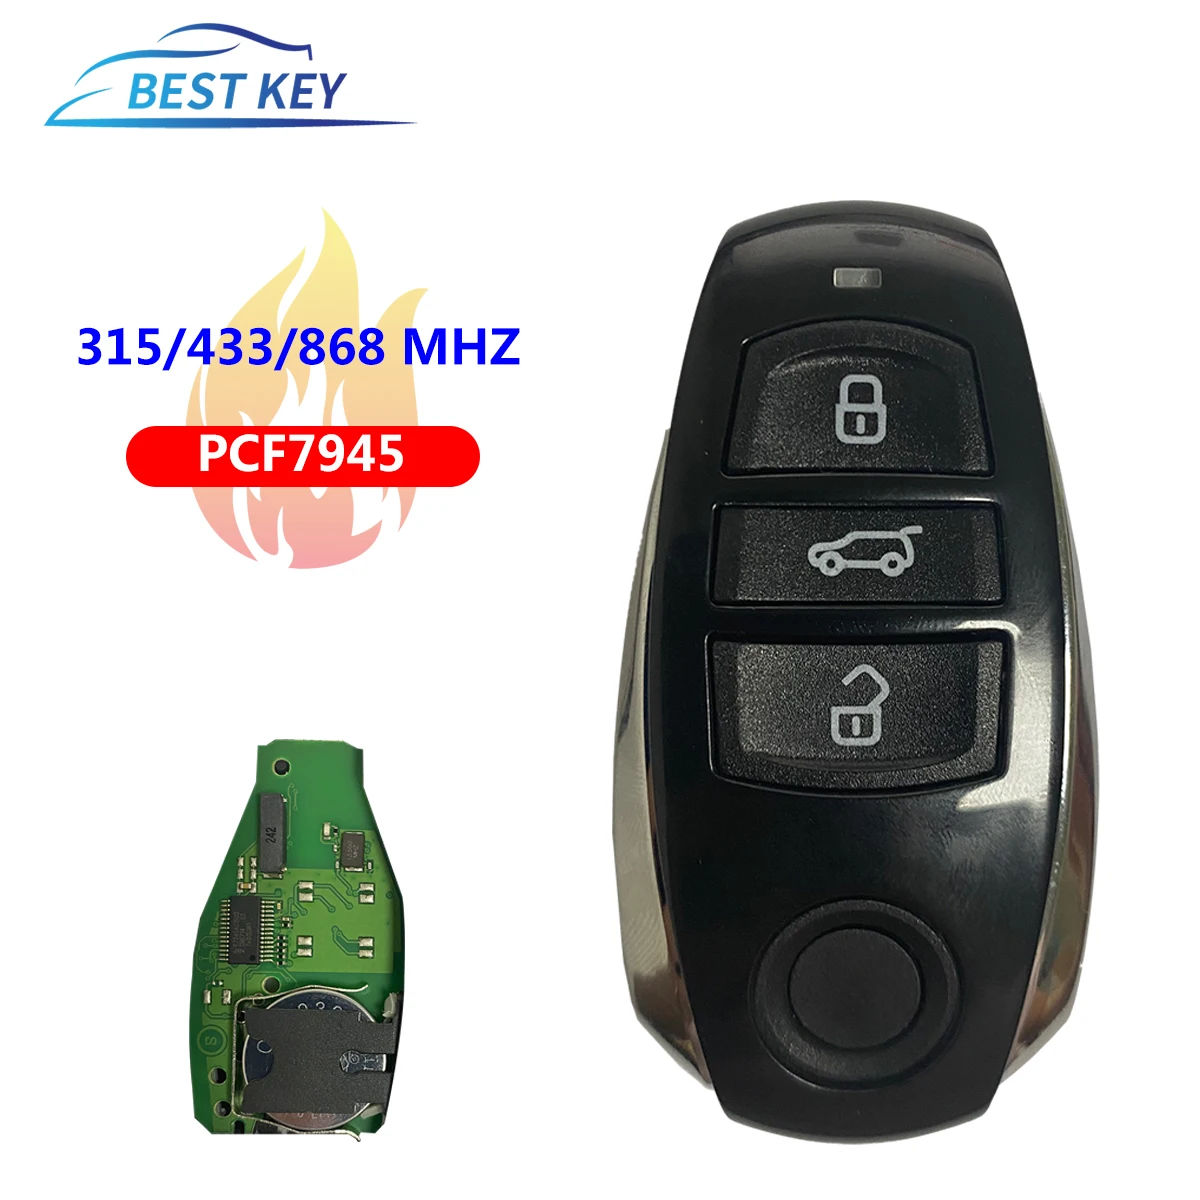 BEST KEY Car Remote Control Key For VW Touareg 2010-2014 PCF7945AC 315/433/868MhzReplace Card Non-Keyless   Auto Smart Control